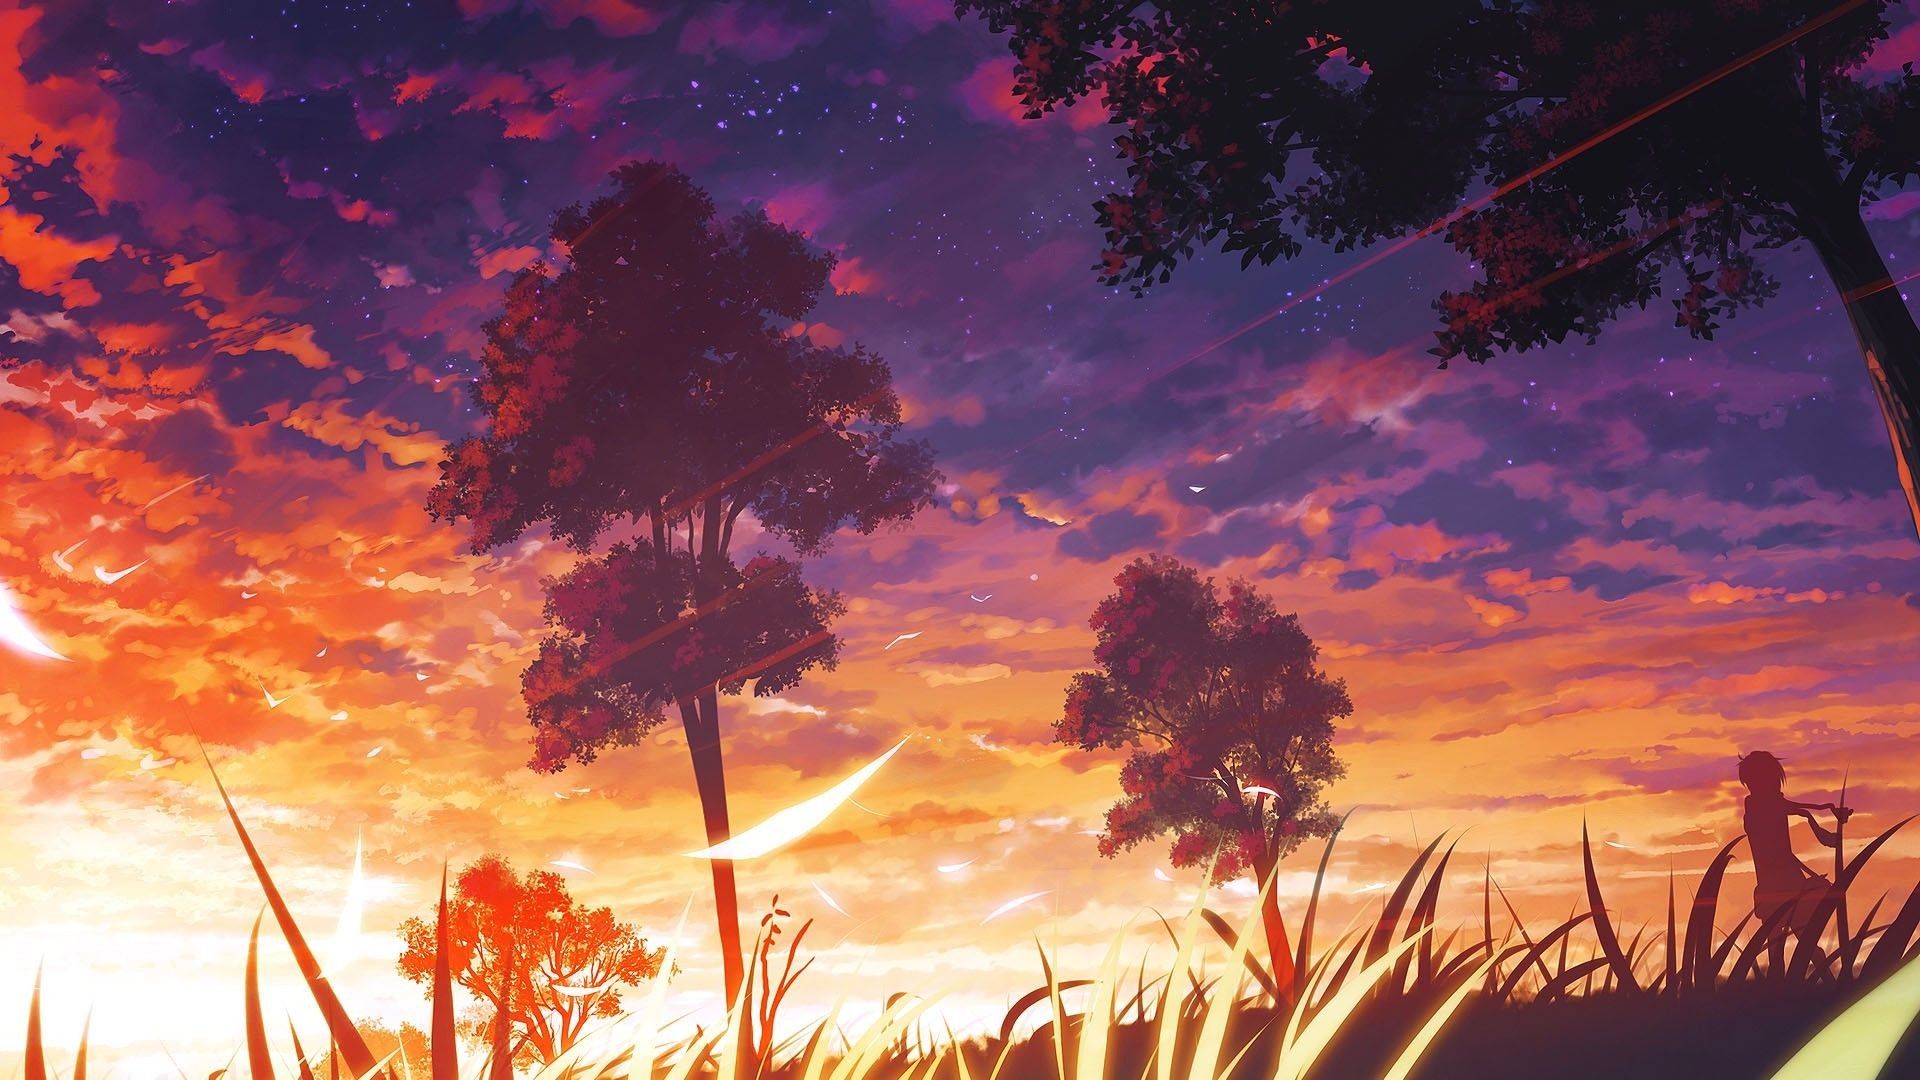 Cool Anime Landscape Wallpaper on .wallpaperafari.com